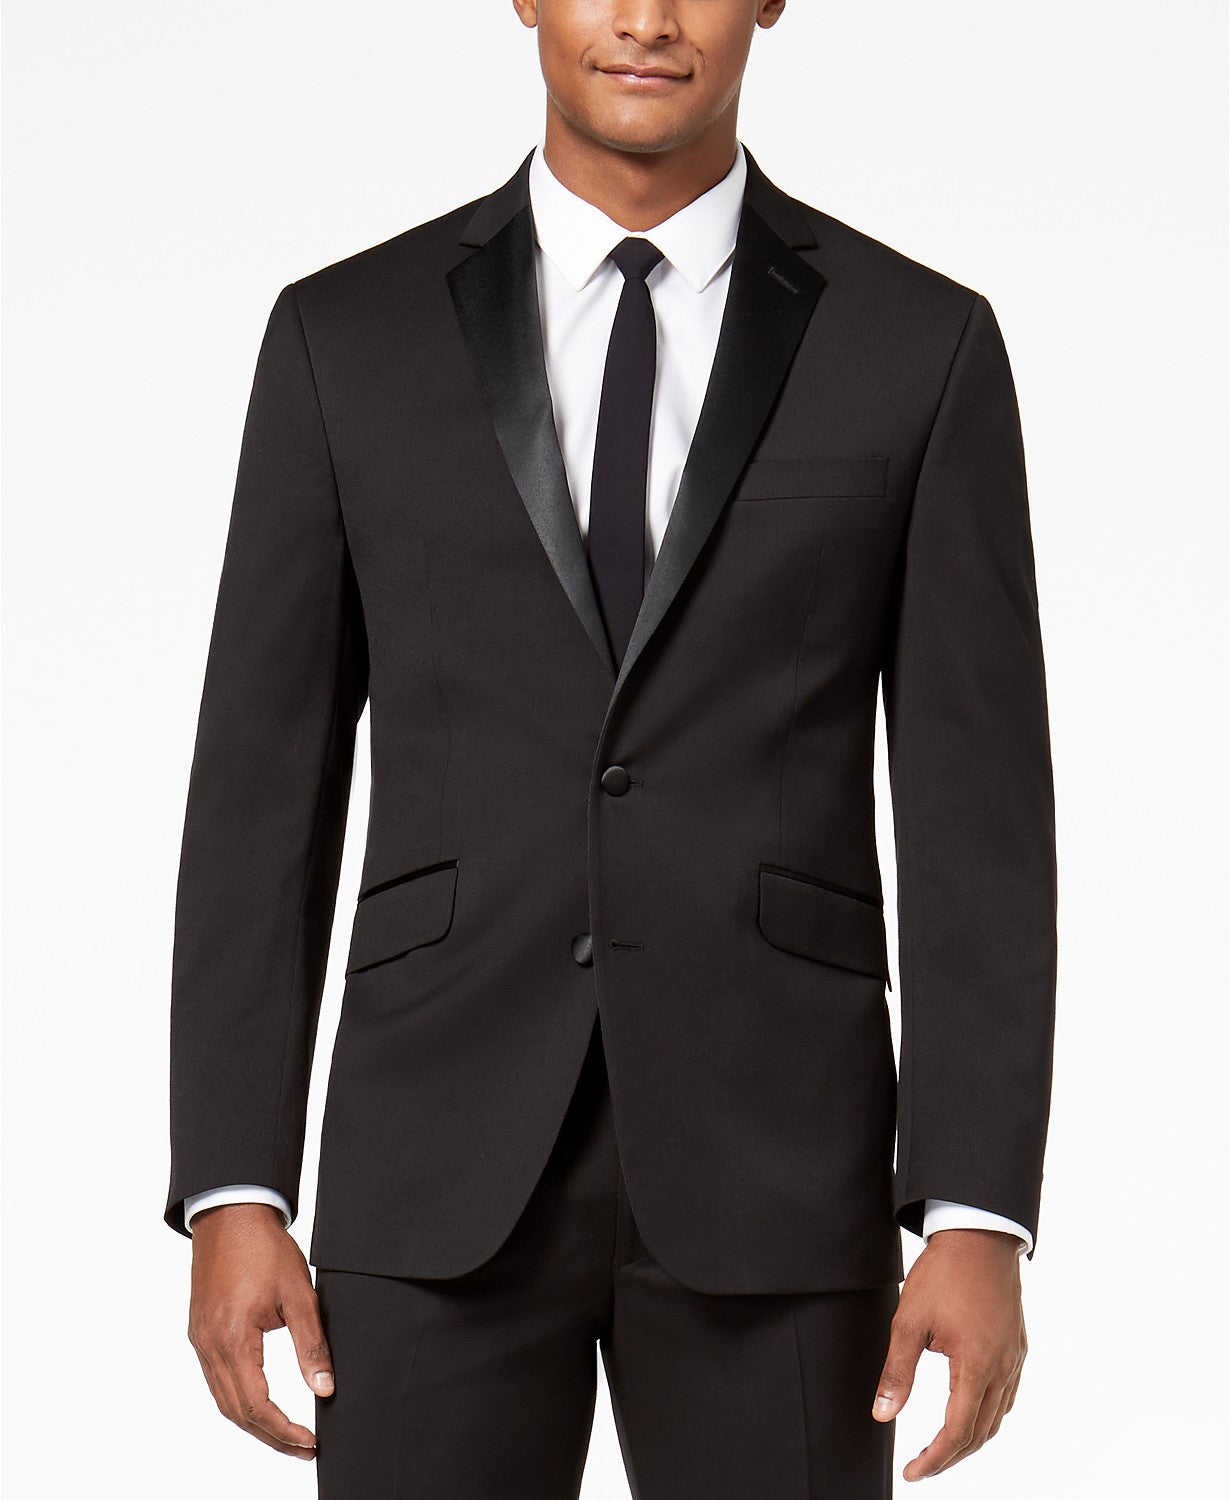 Kenneth Cole Mens Tuxedo Suit Jacket 44R Flex Slim-Fit Black JACKET ONLY